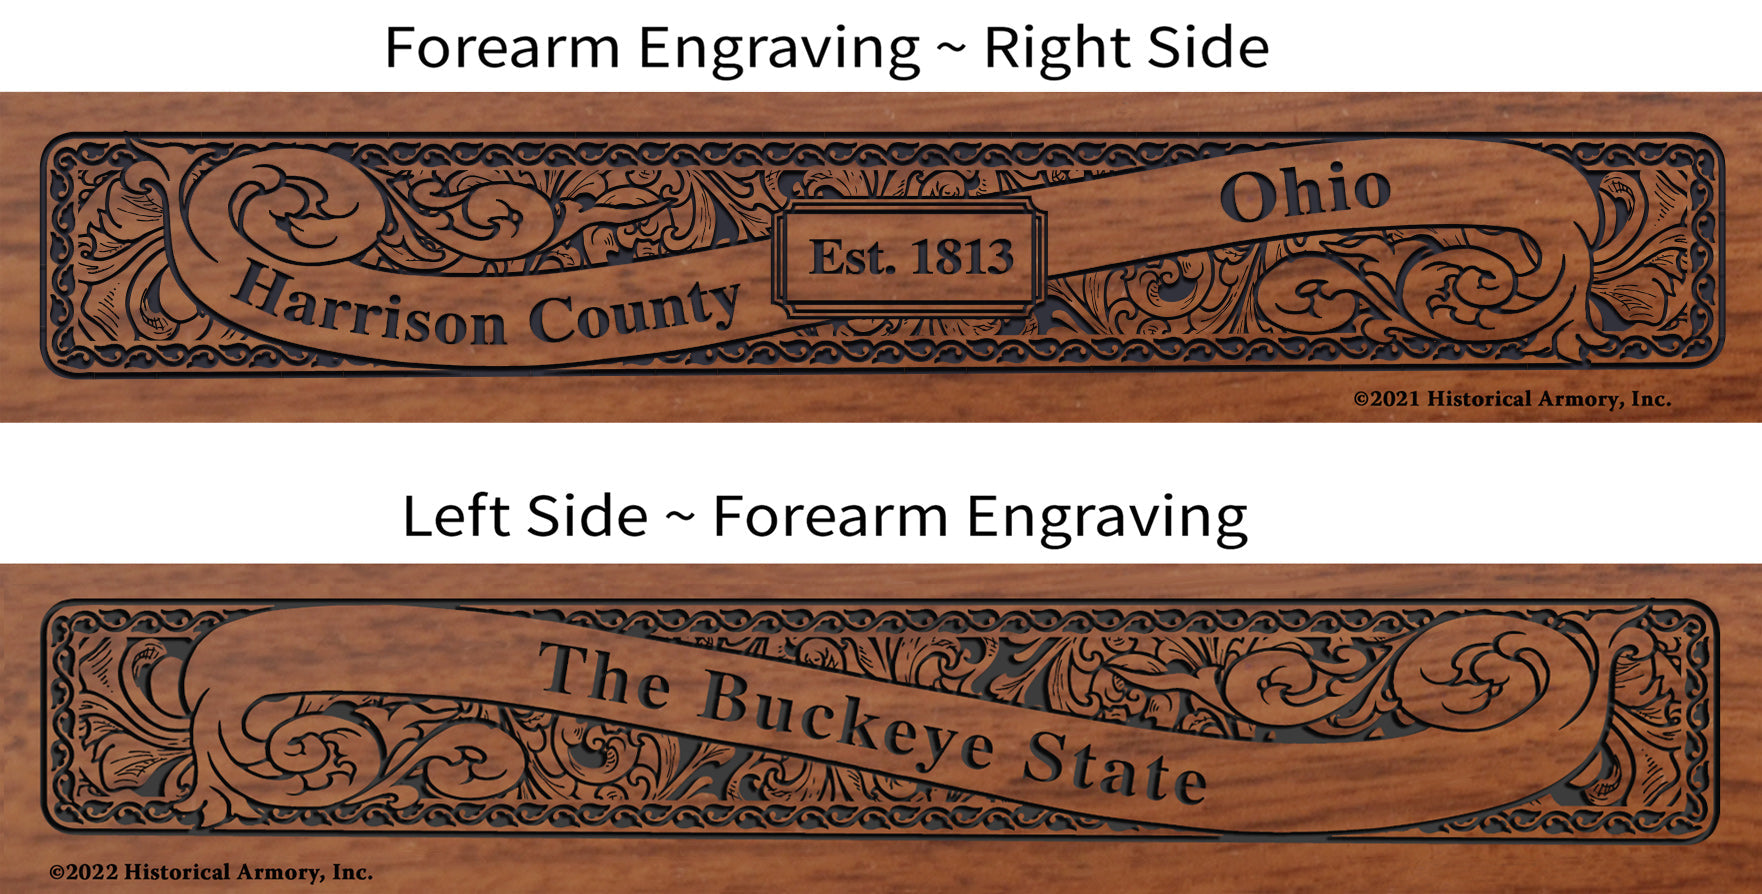 Harrison County Ohio Engraved Rifle Forearm